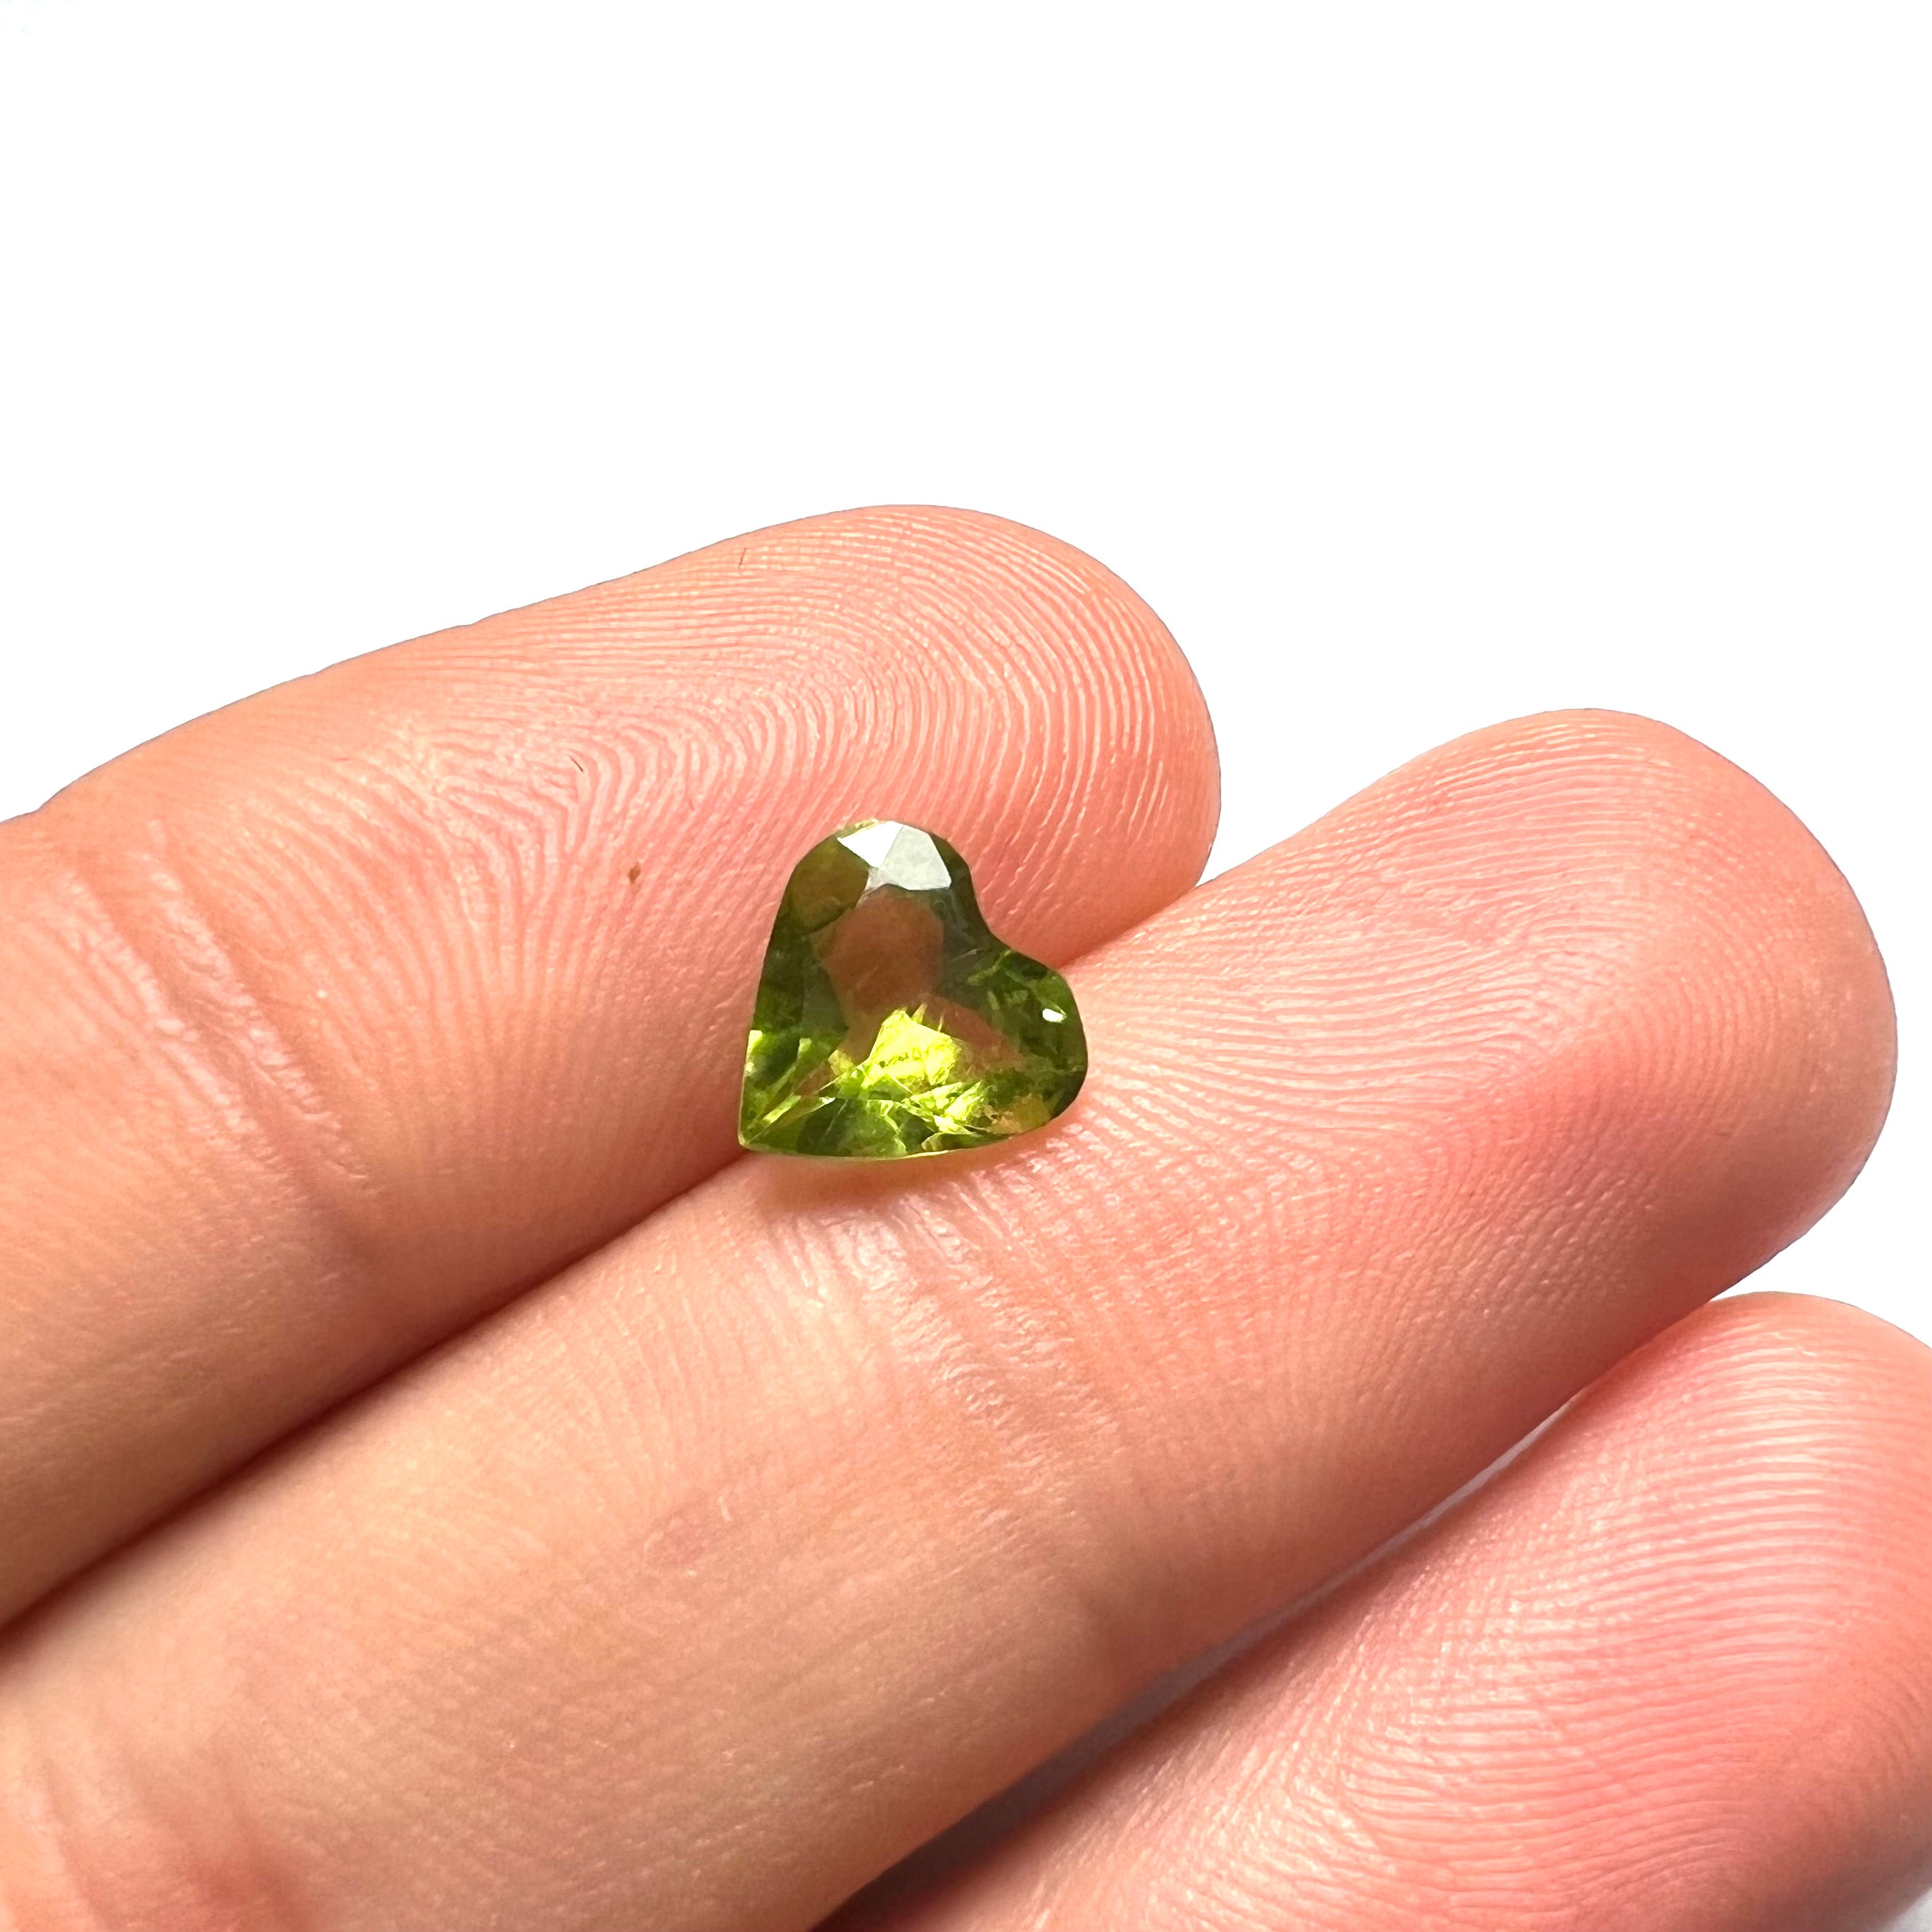 1.4CTW Loose Natural Heart Cut Peridot 7.2x7x4mmmm Earth mined Gemstone